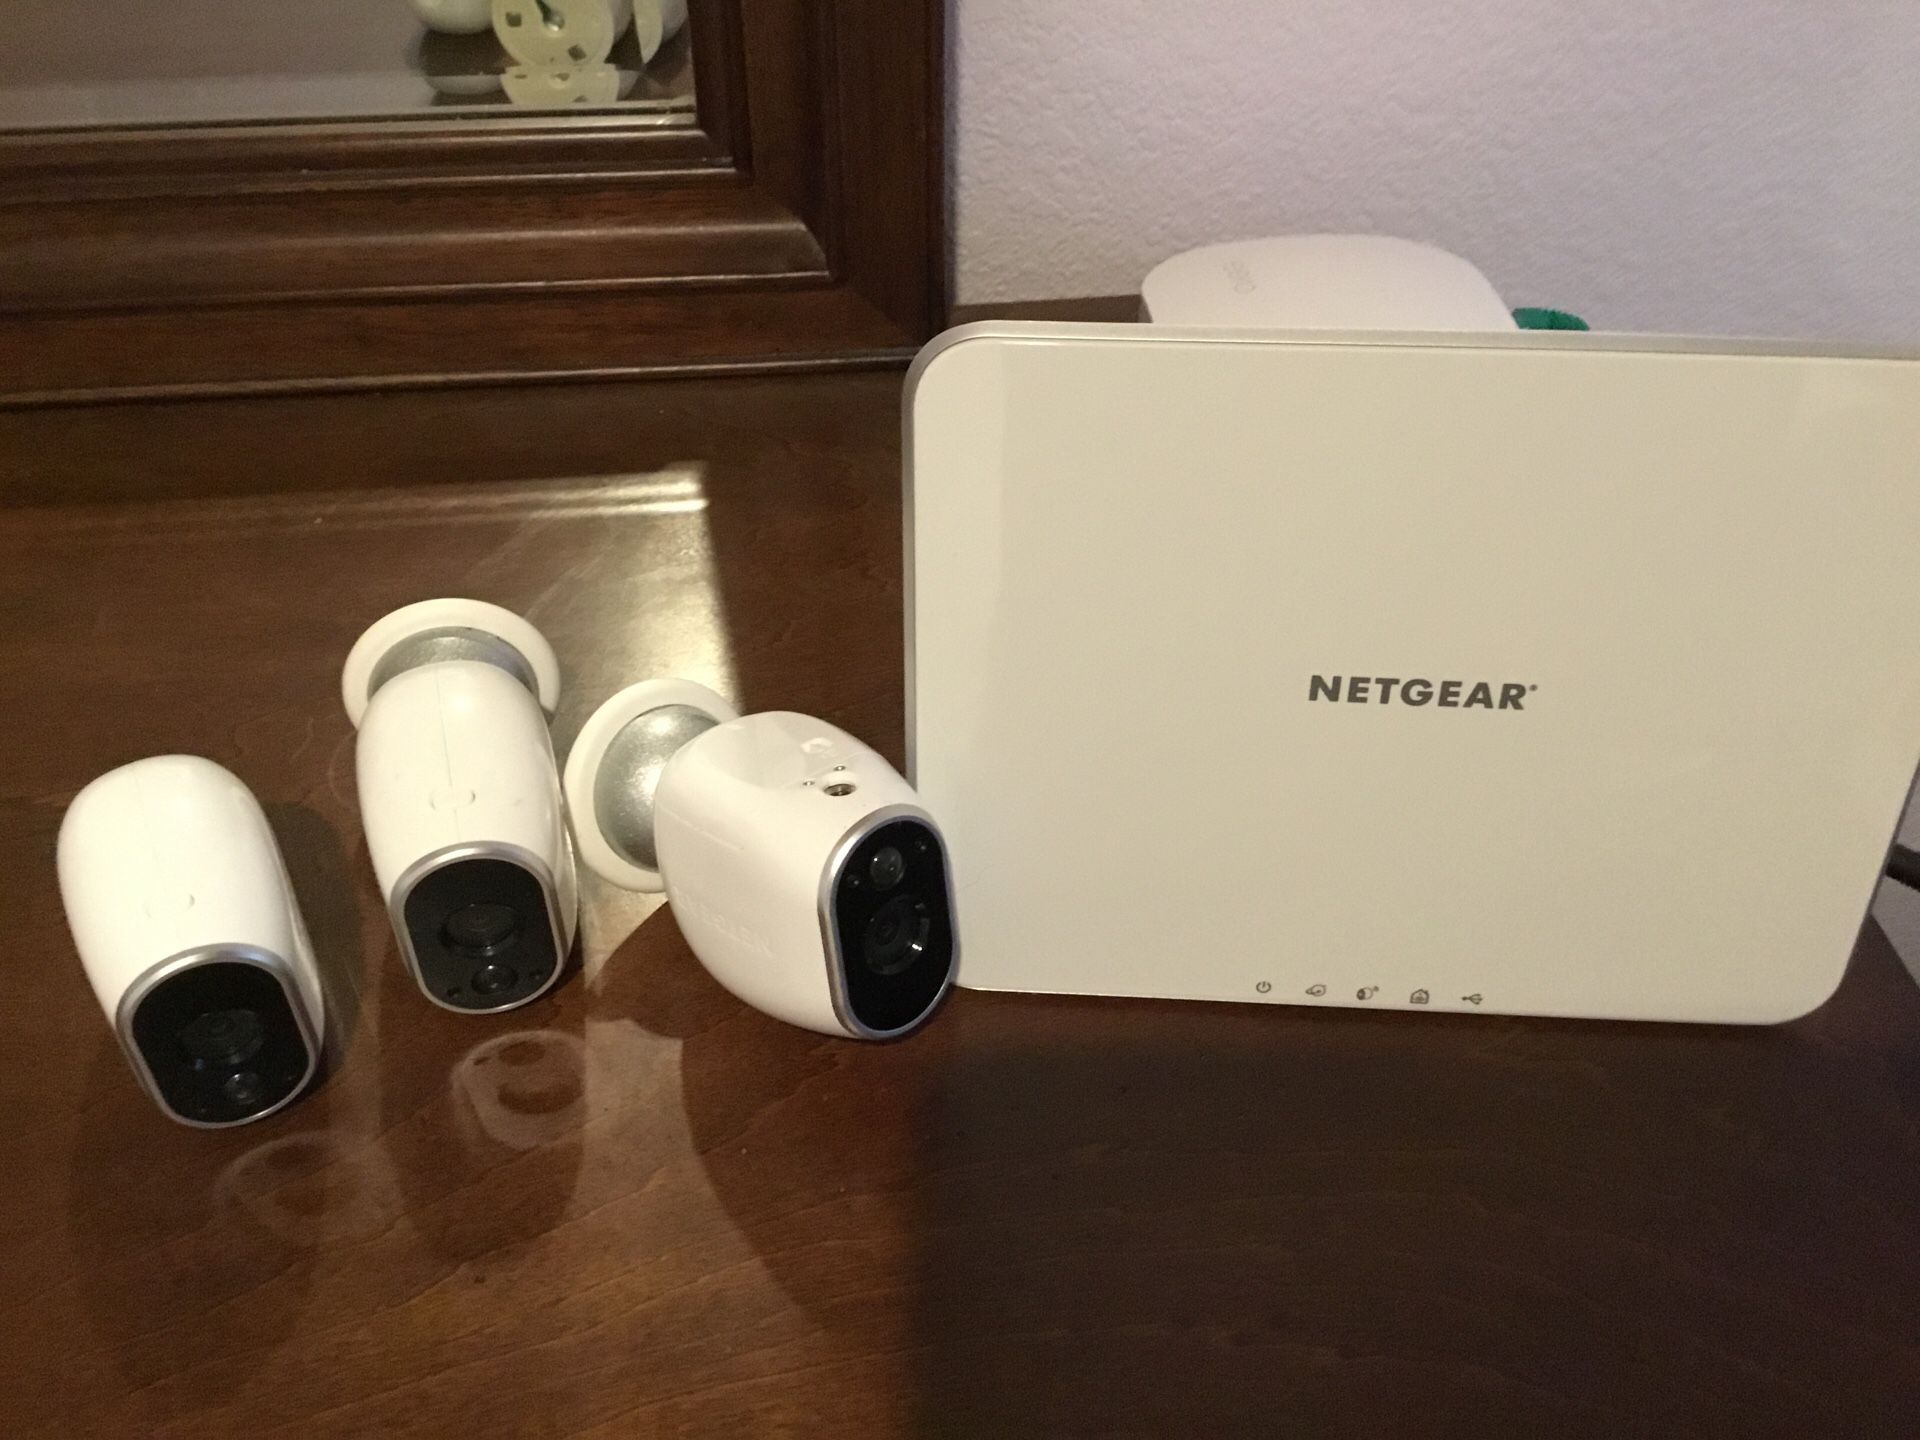 Arlo netgear security camera with base unit. Rarely used